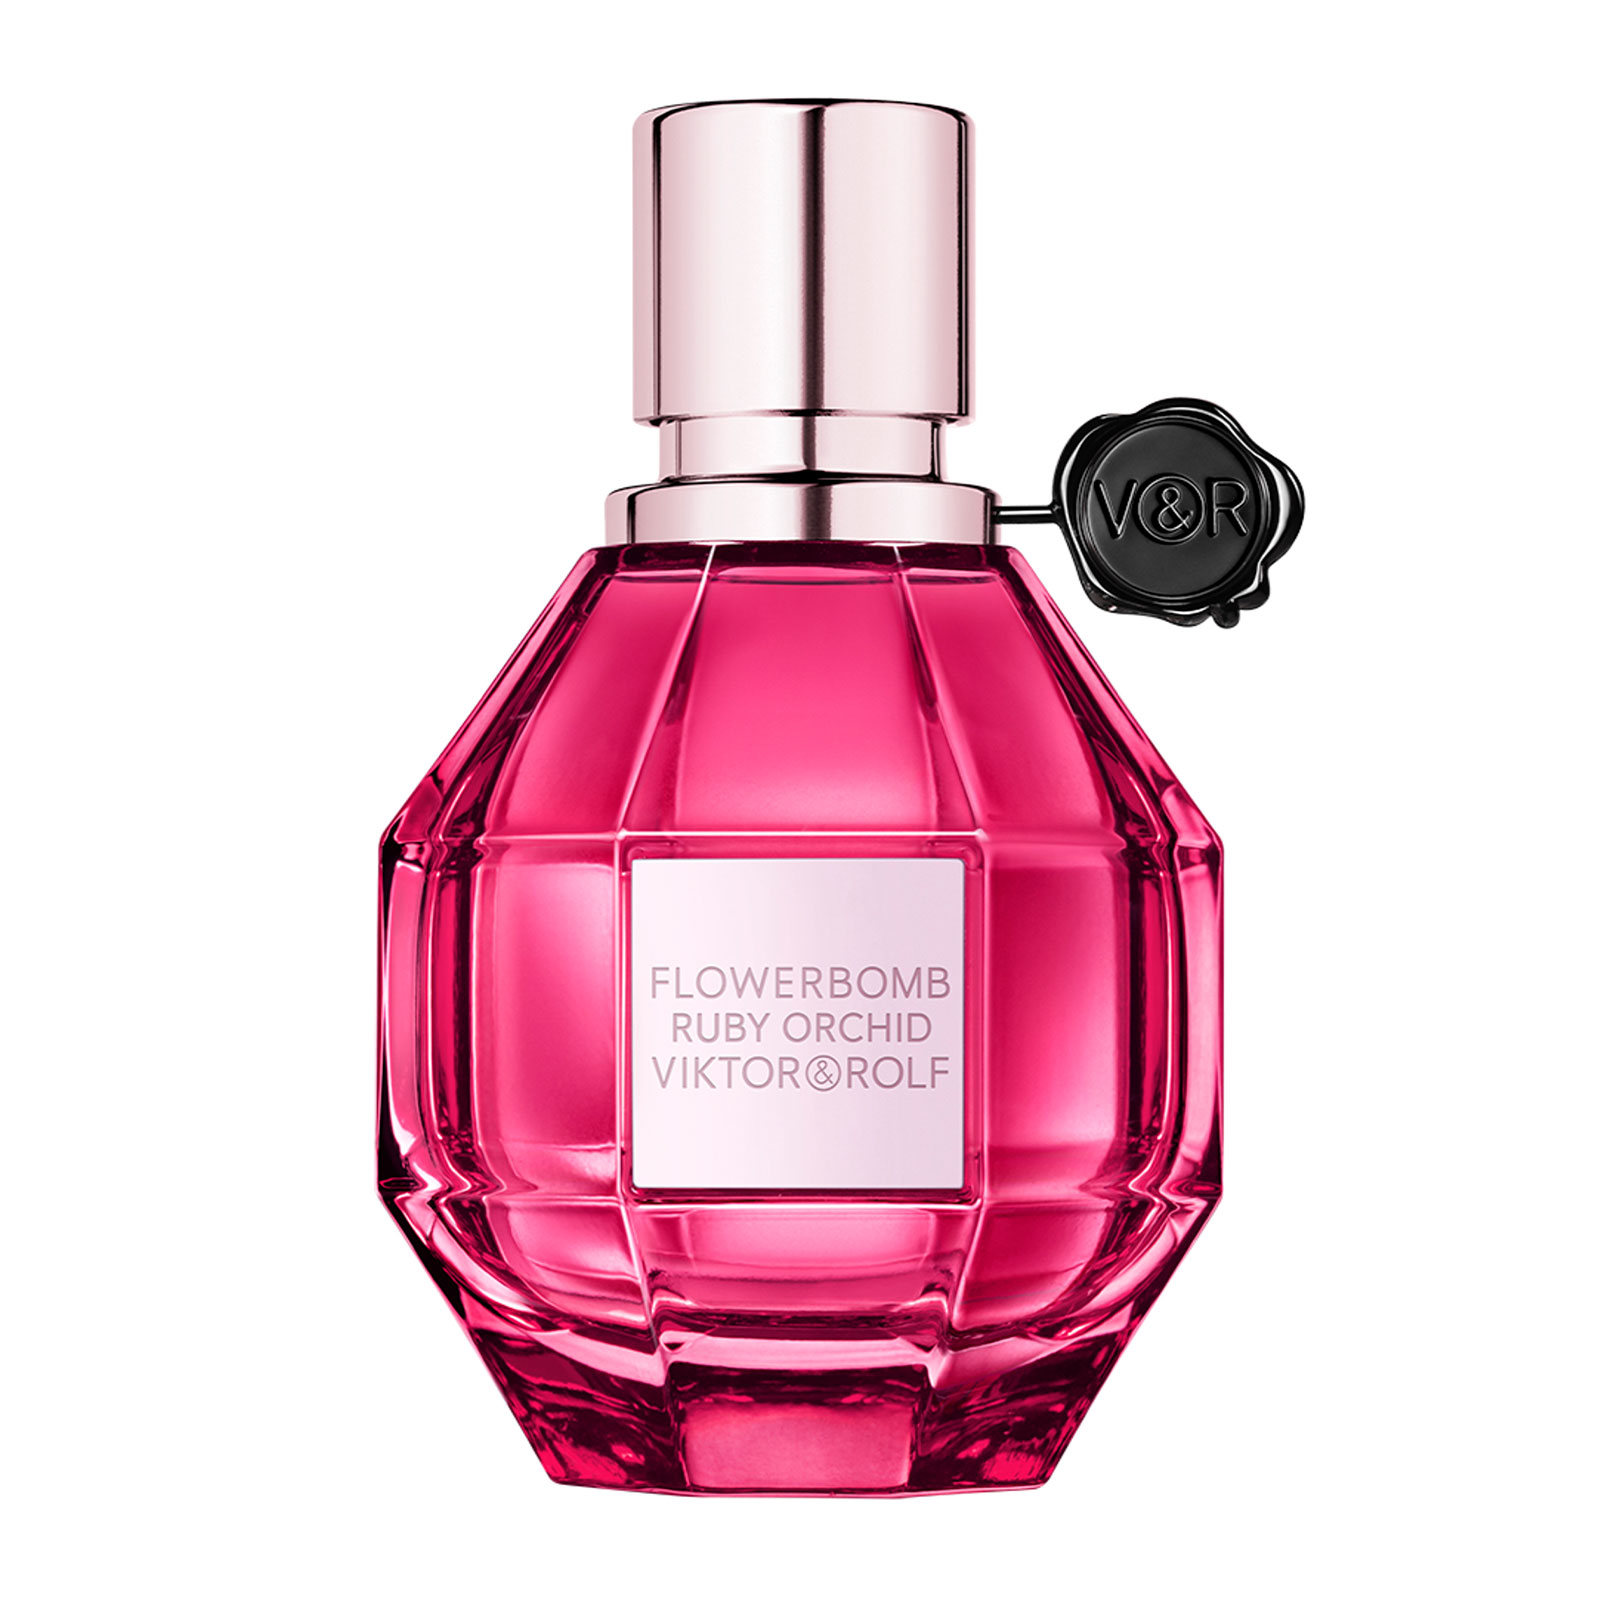 VIKTOR&ROLF Flowerbomb Ruby Orchid Eau de Parfum 50ml